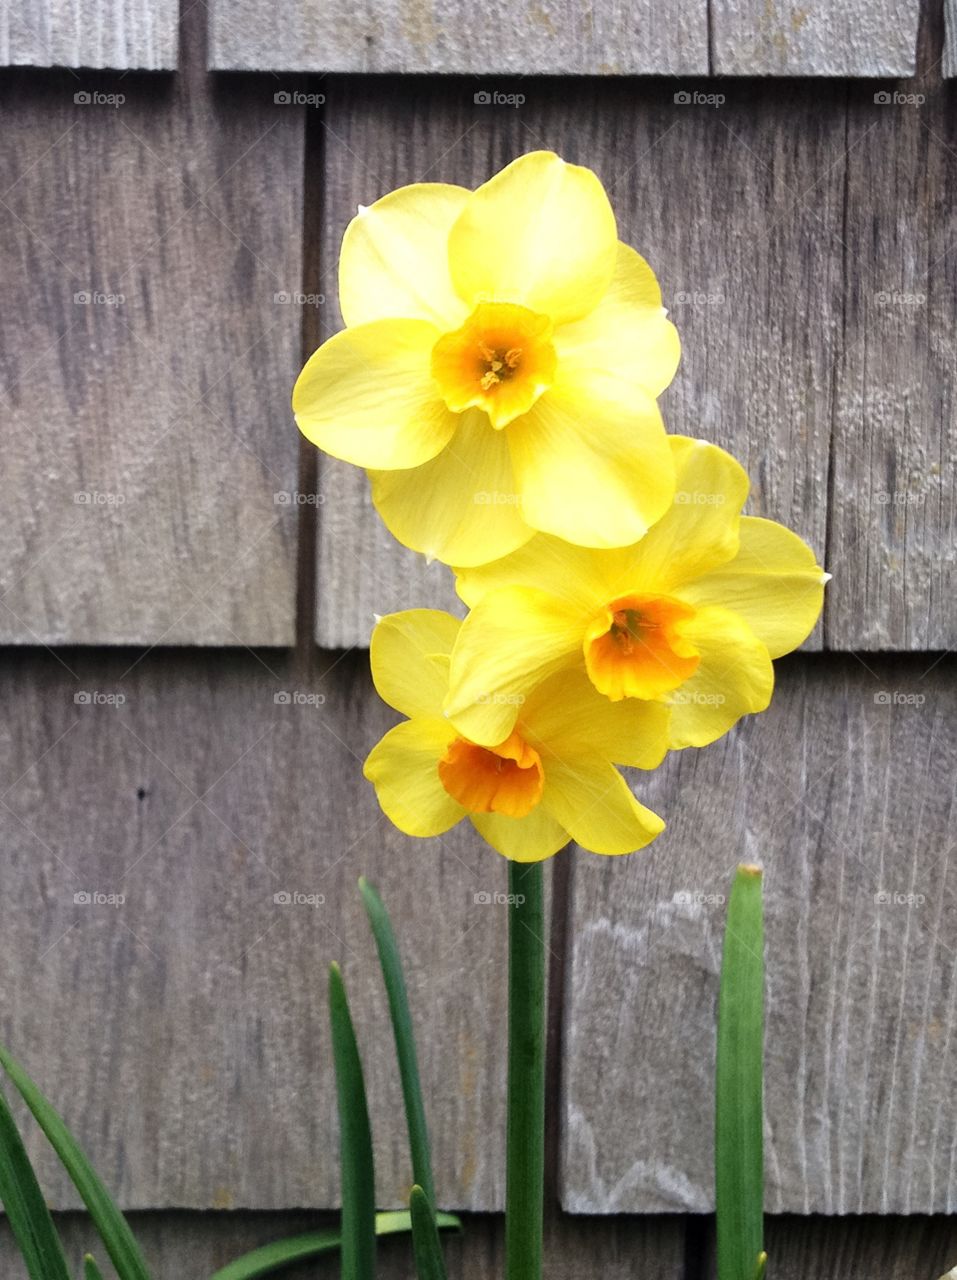 Daffodils. Yellow Daffodils against a grey shingled home in Rockport,  MA